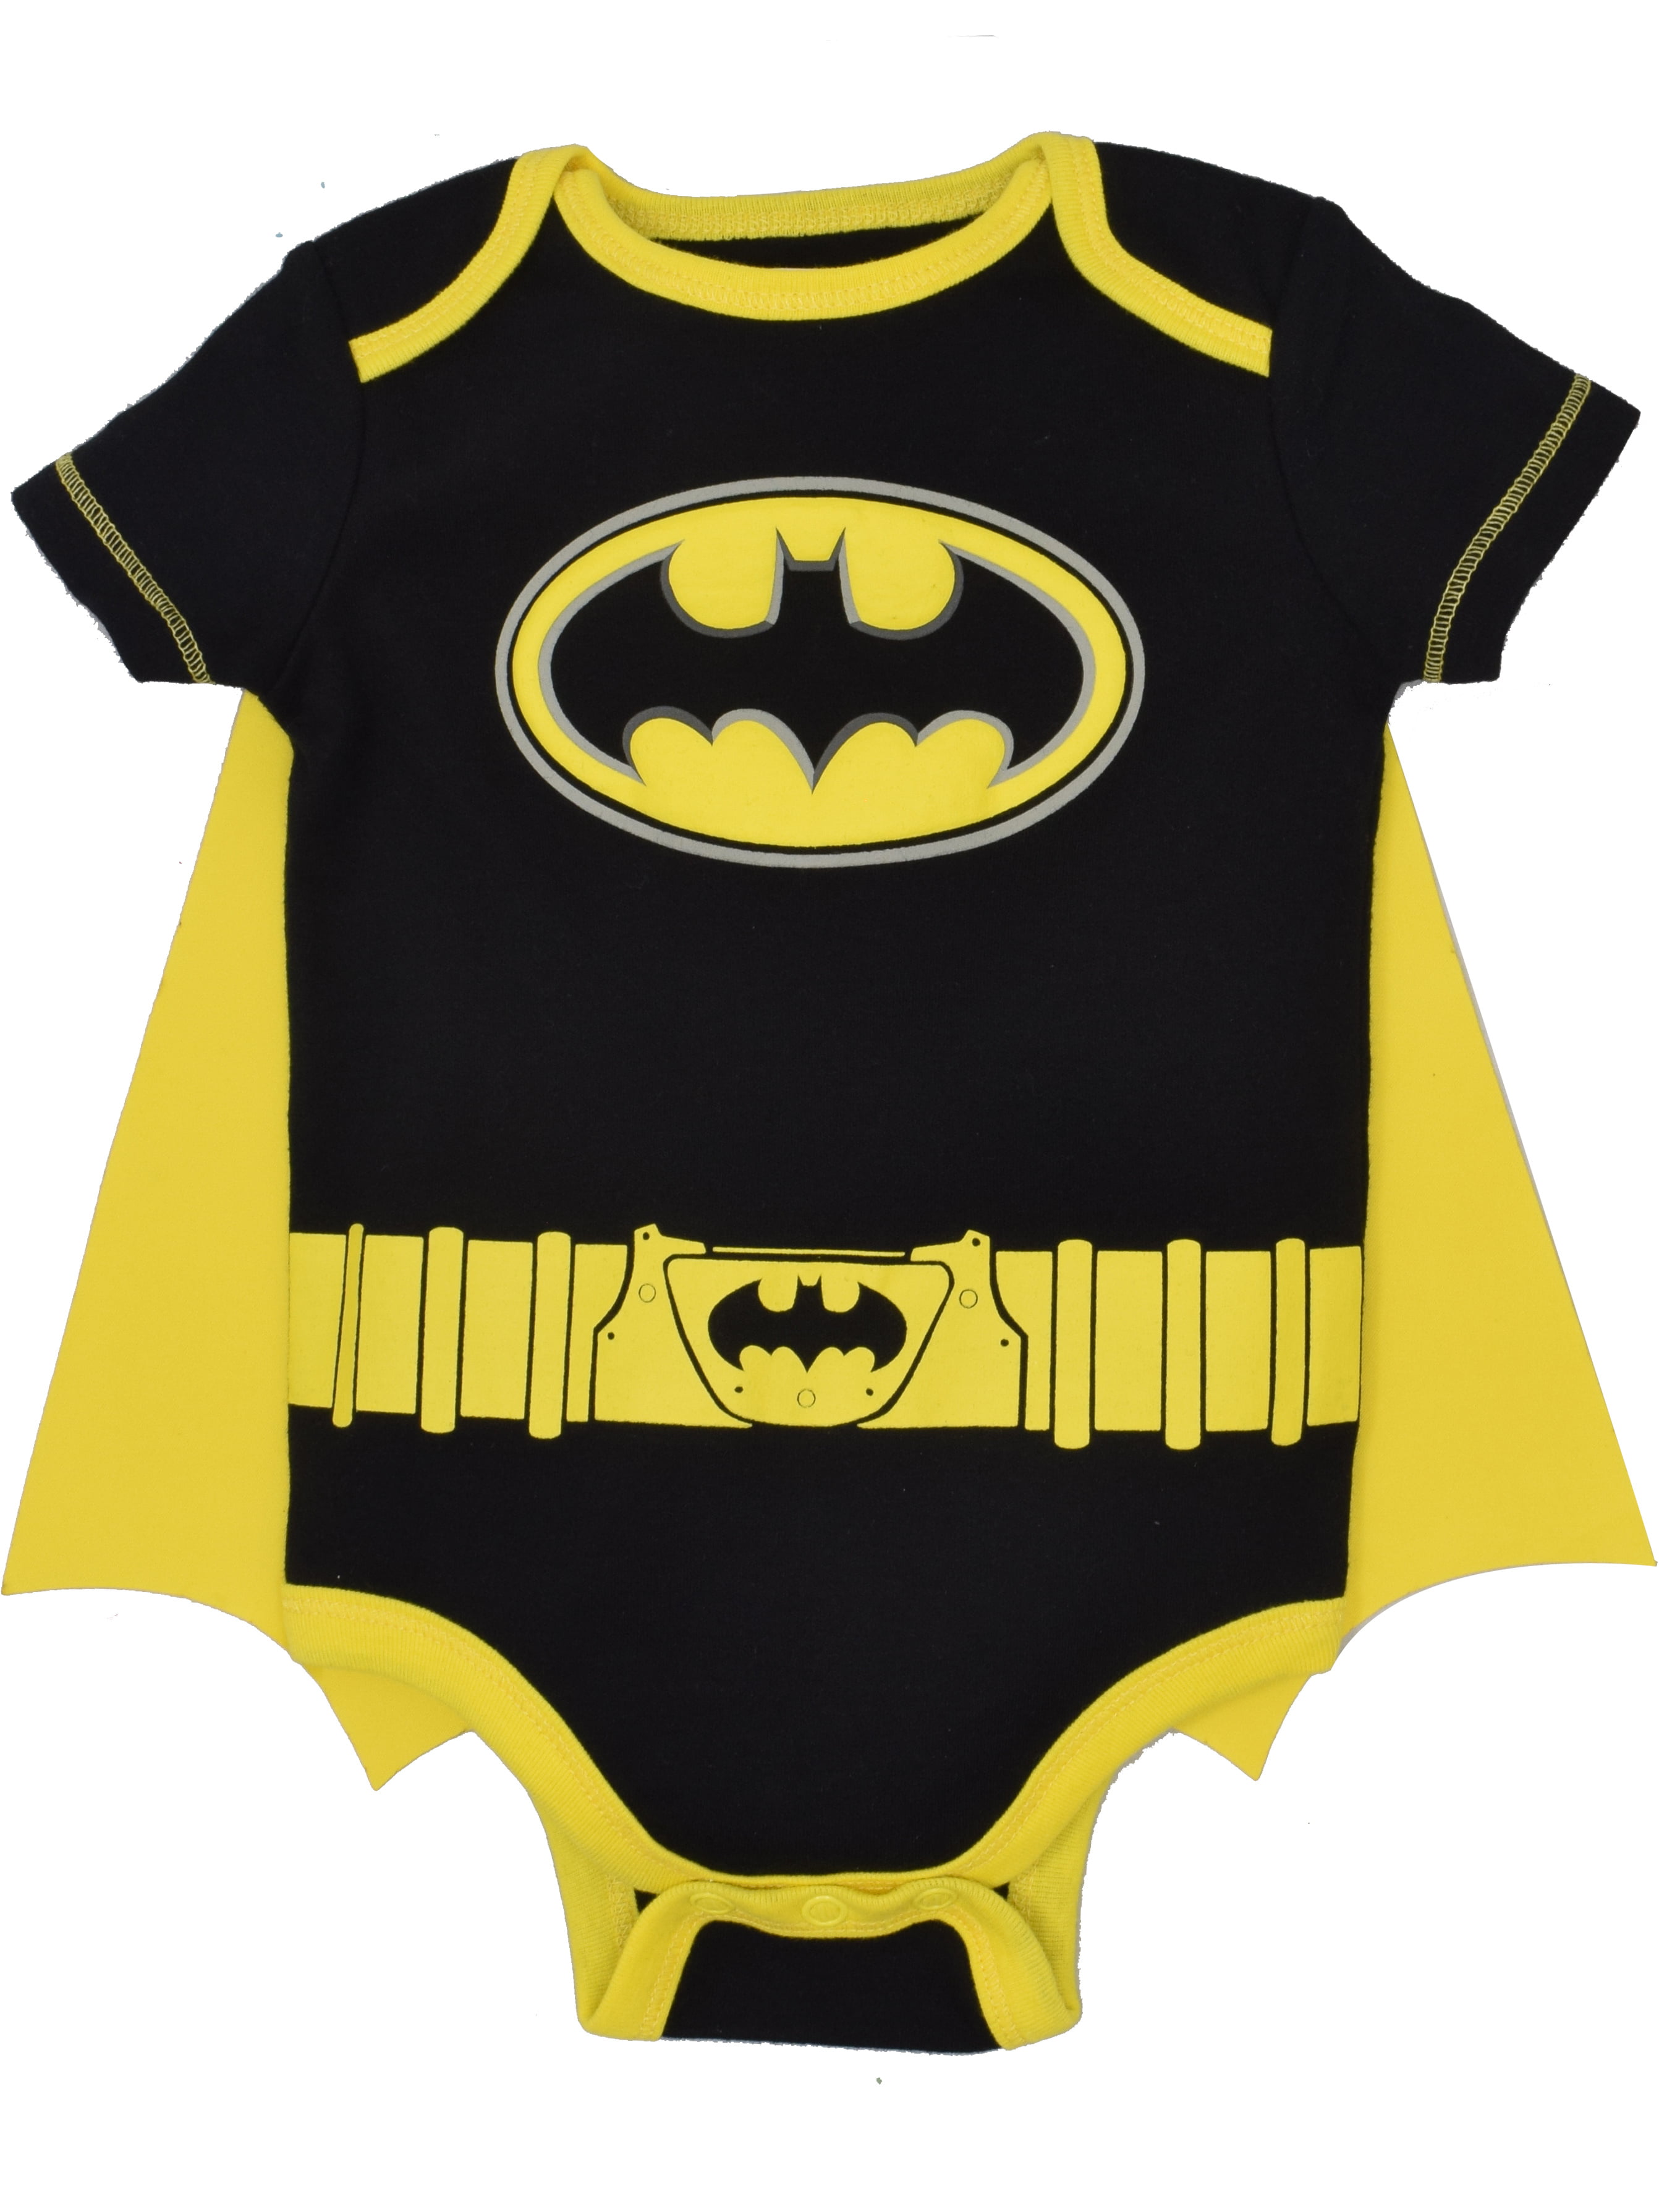 Baby Boy Batman Fancy Dress Costume Bodysuit Outfit with Cape 